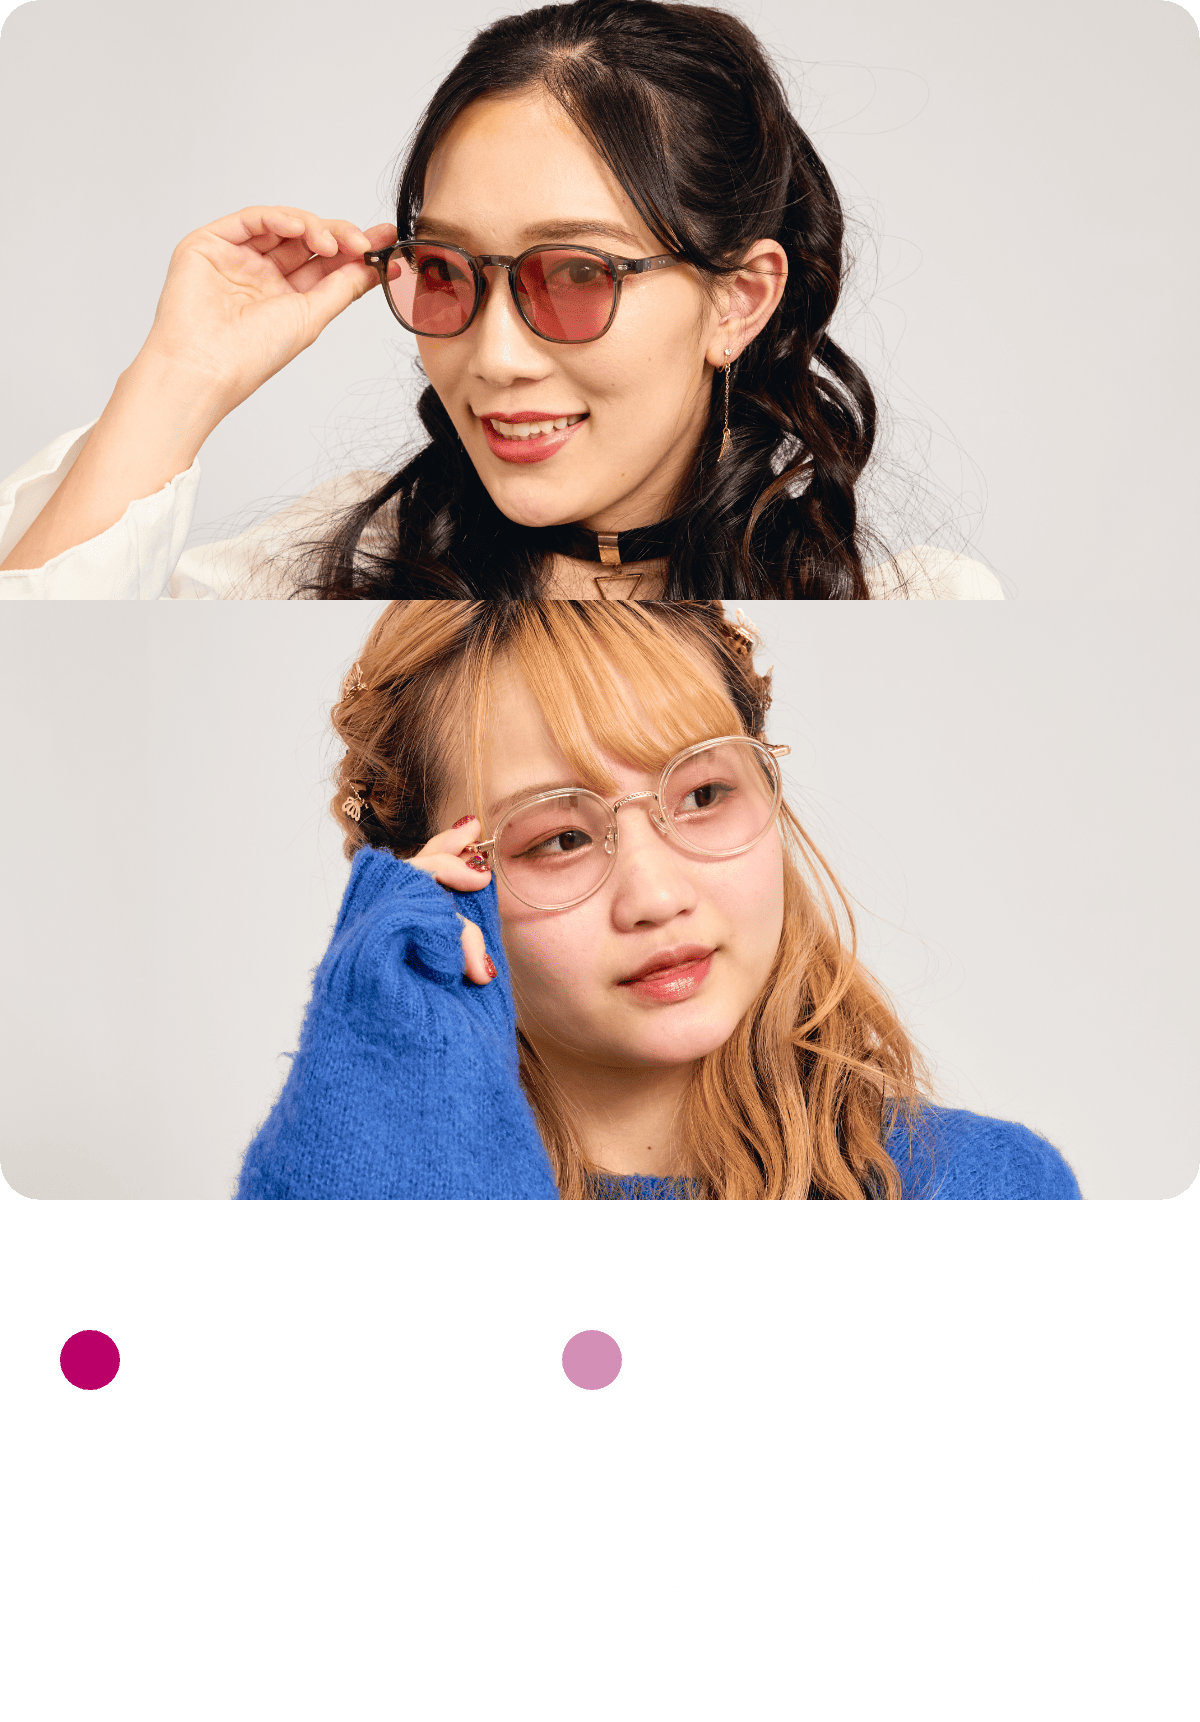 Red/Pink 目元に血色が足され、自然と上気したような健康肌が期待できます。視界の明るさを保ちながら日差しの眩しさを和らげてくれます。